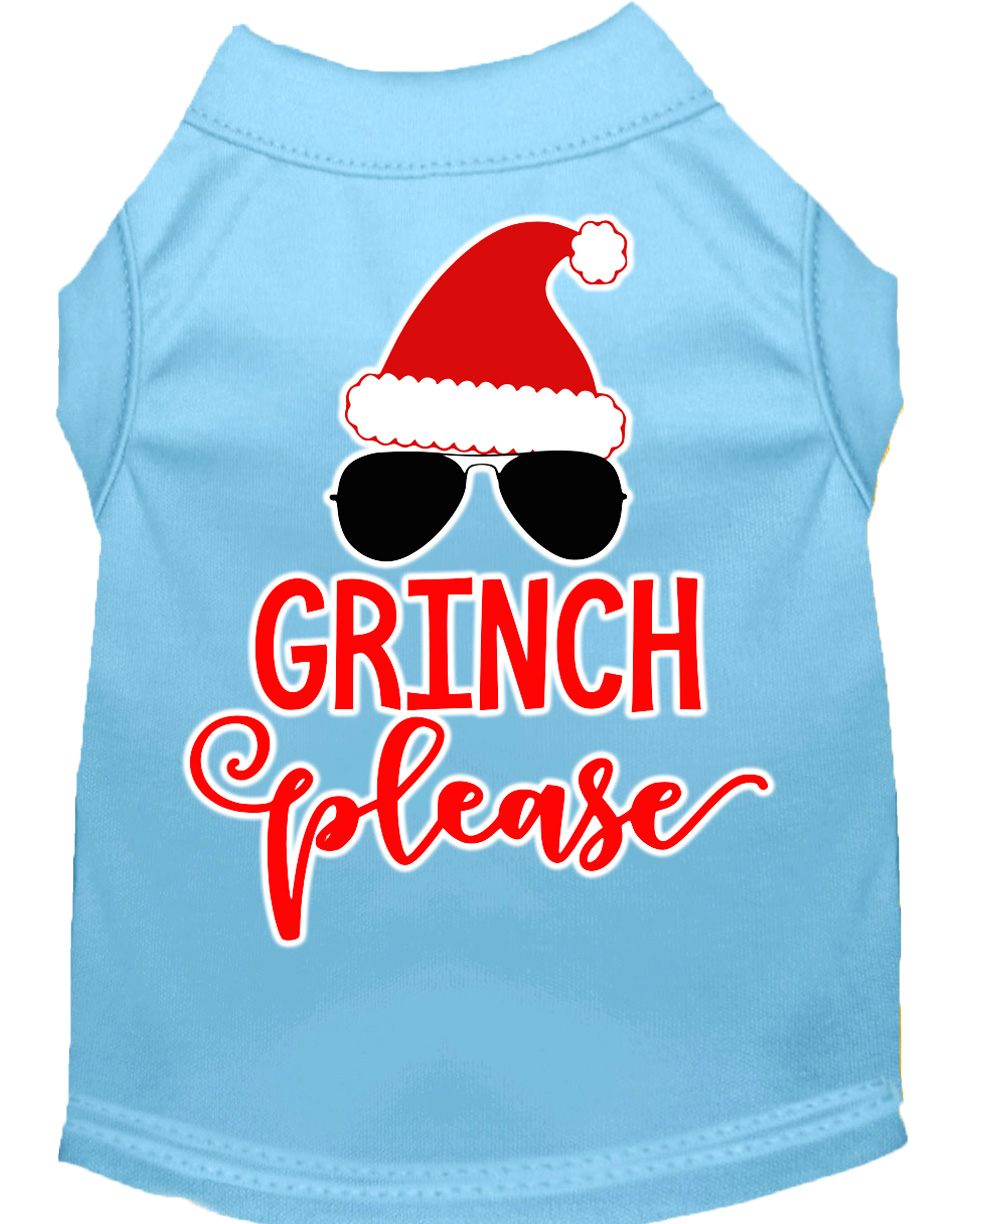 Grinch Please Screen Print Dog Shirt Baby Blue Med